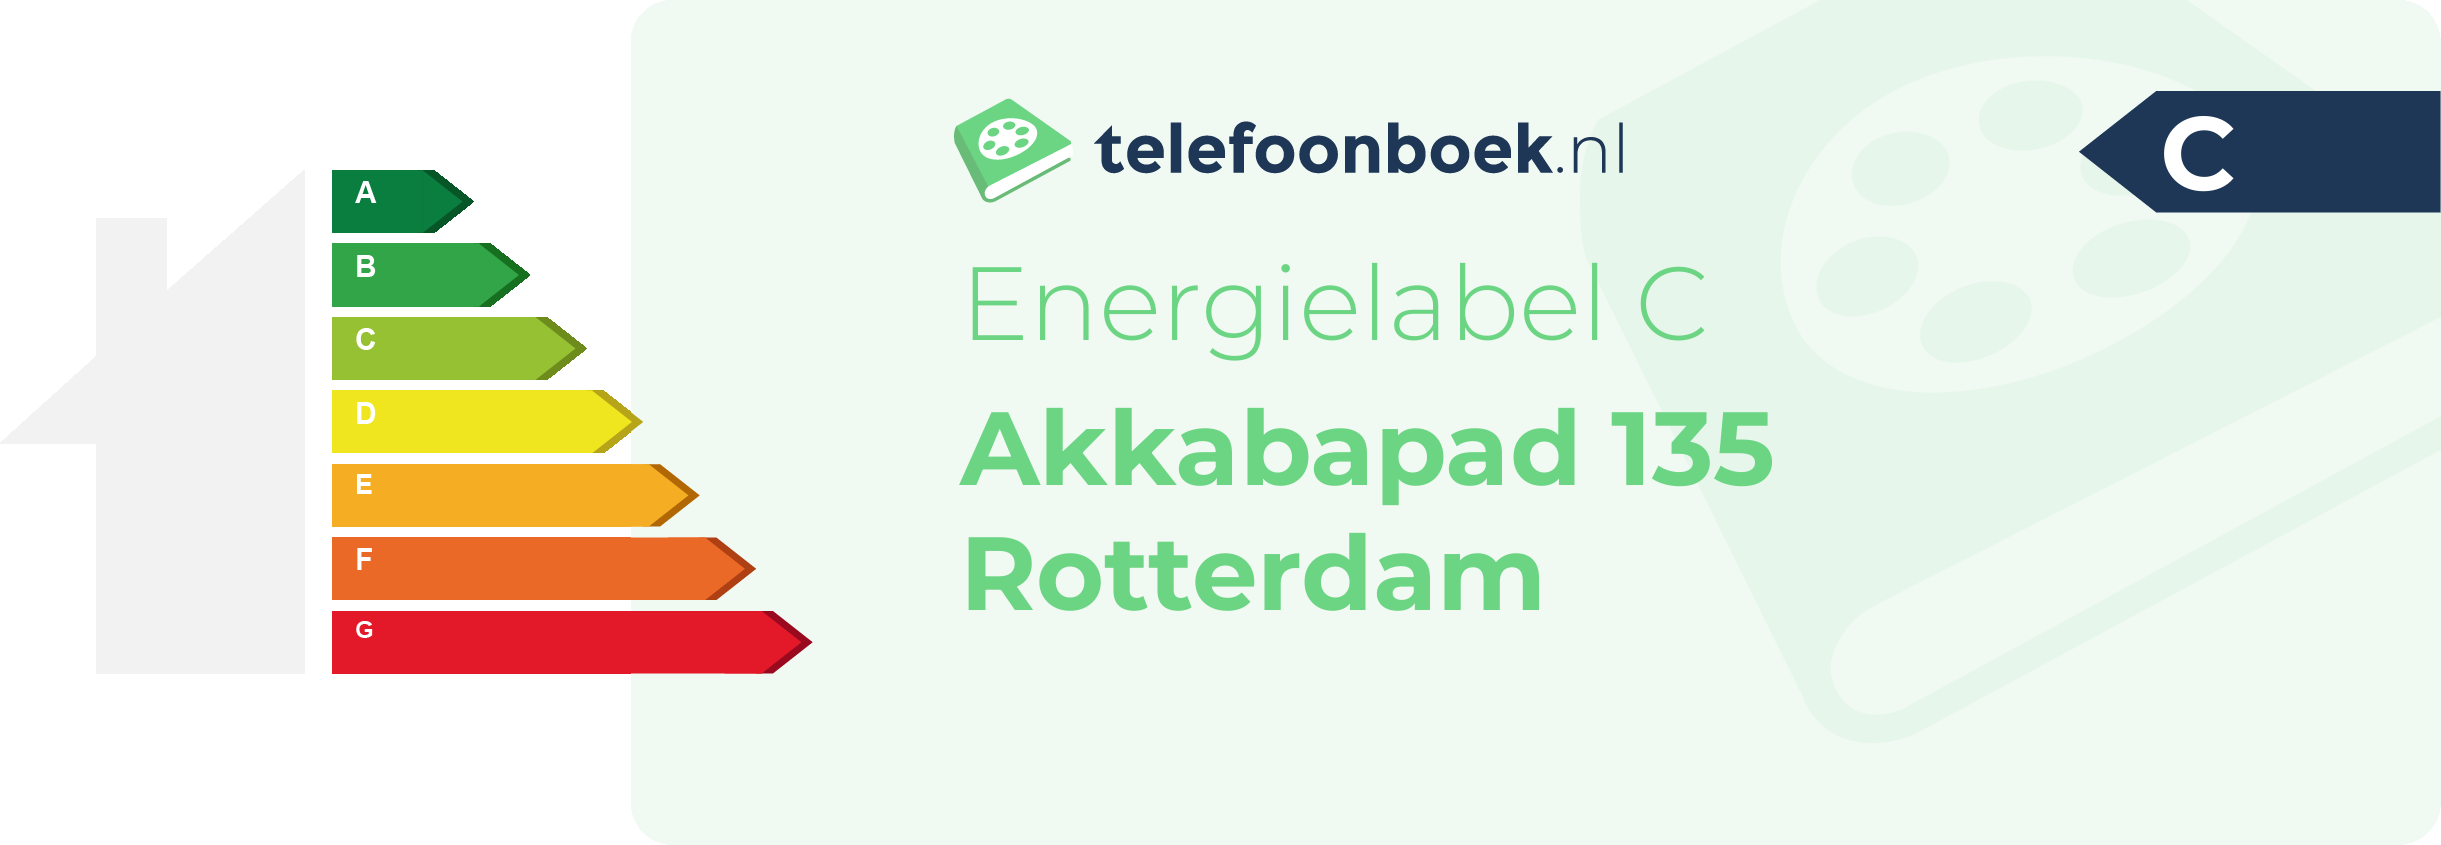 Energielabel Akkabapad 135 Rotterdam